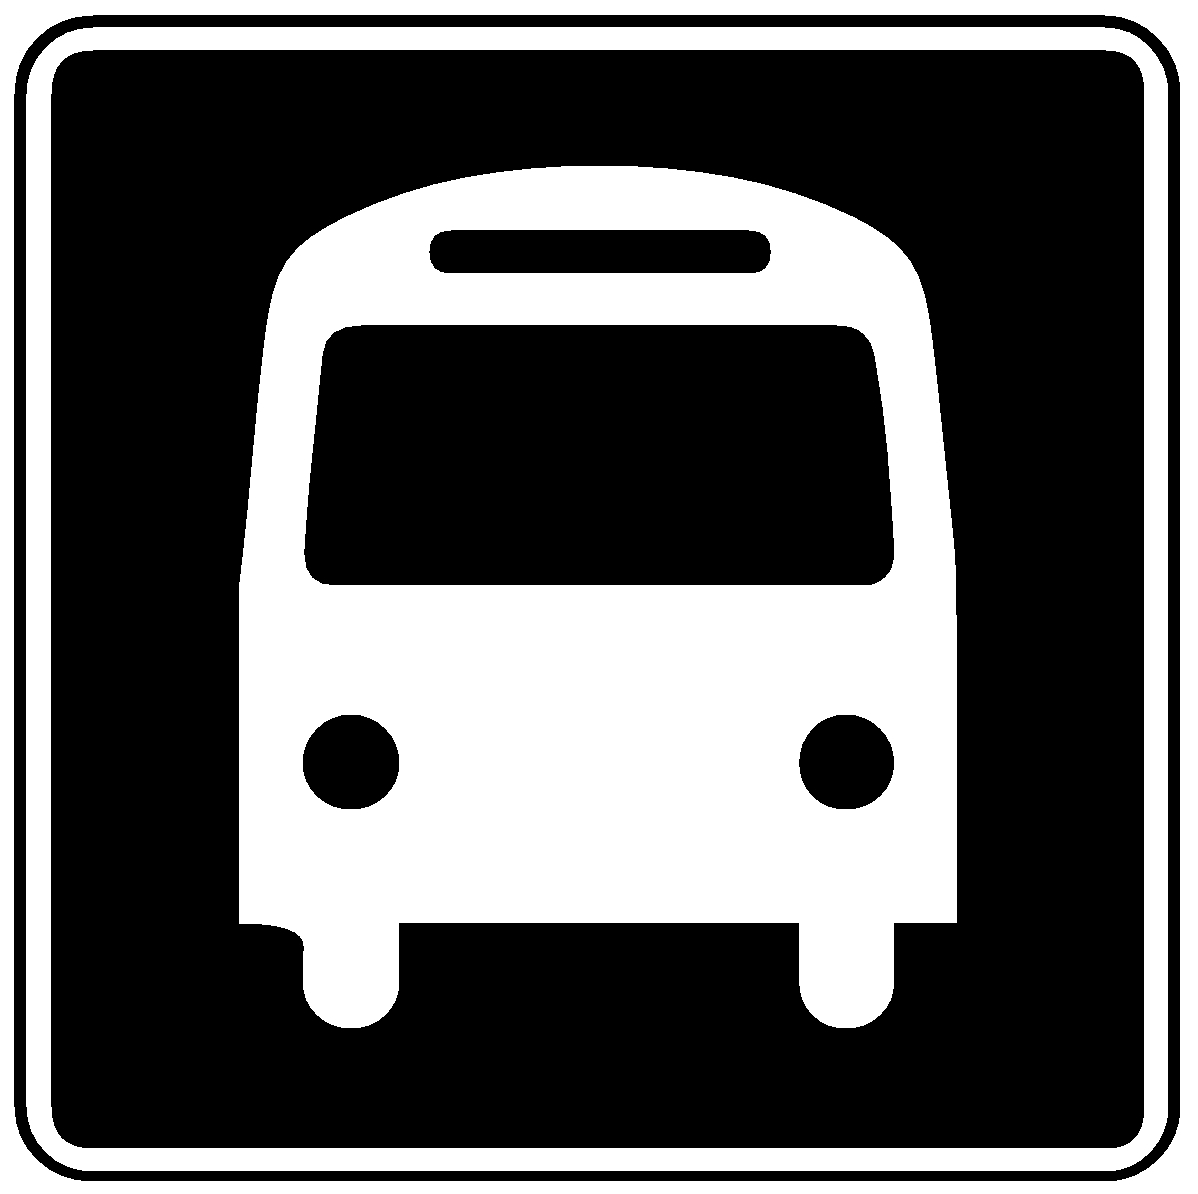 524 - GENERAL McMULLEN Frequent - NORT Bus Schedule